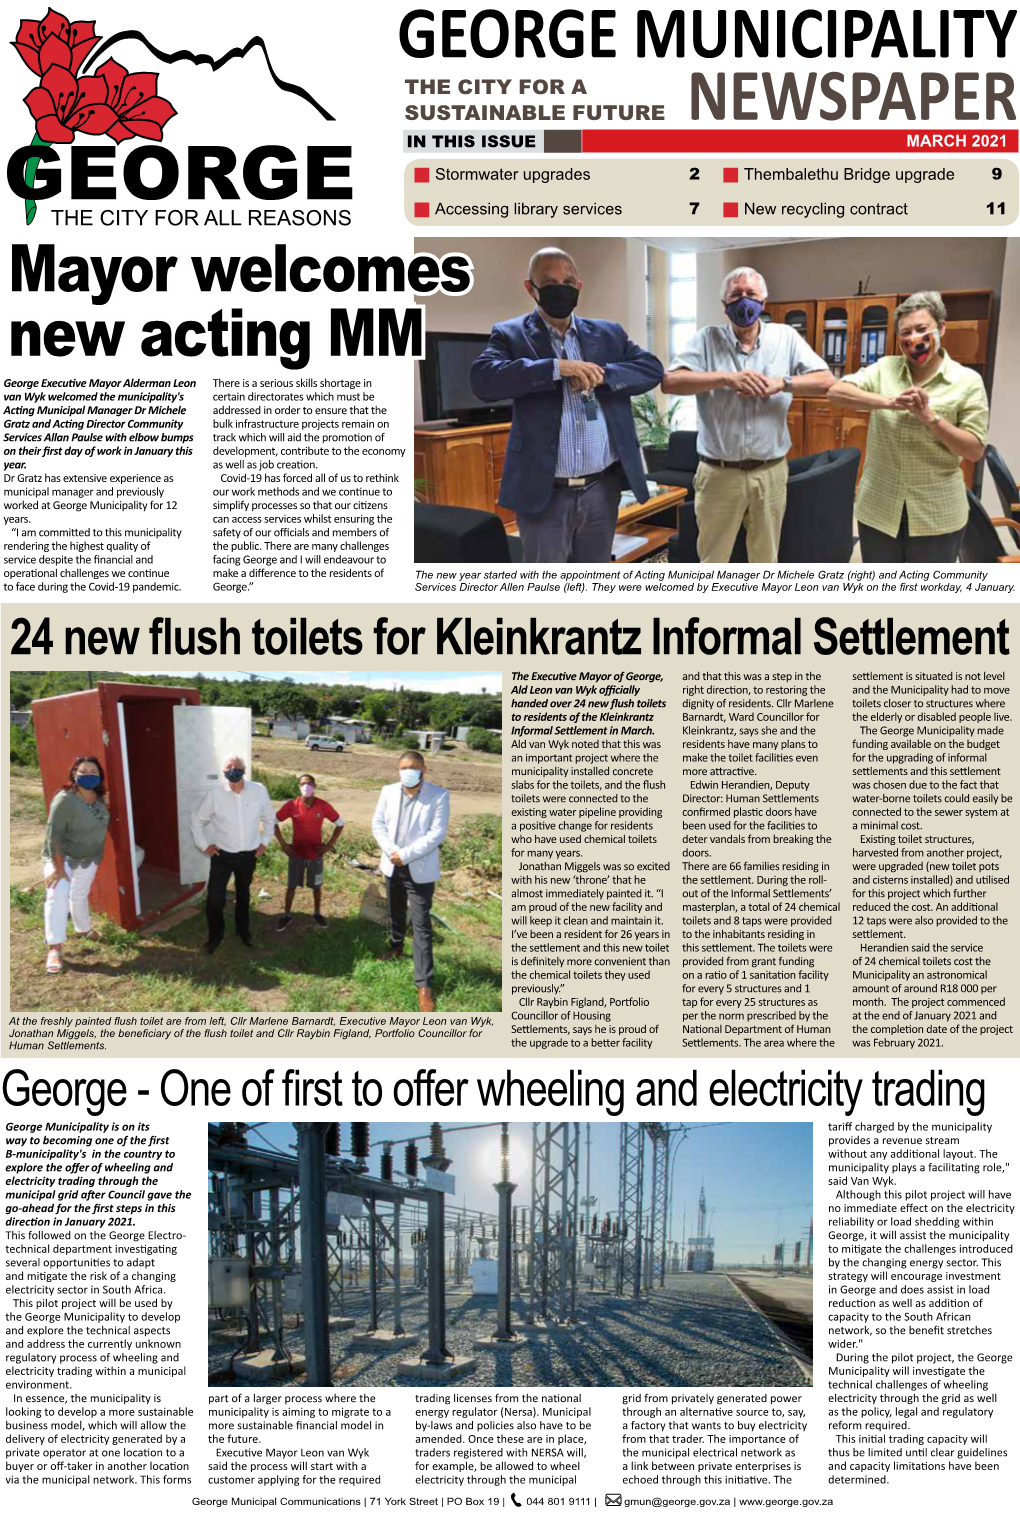 George Municipality Newspaper